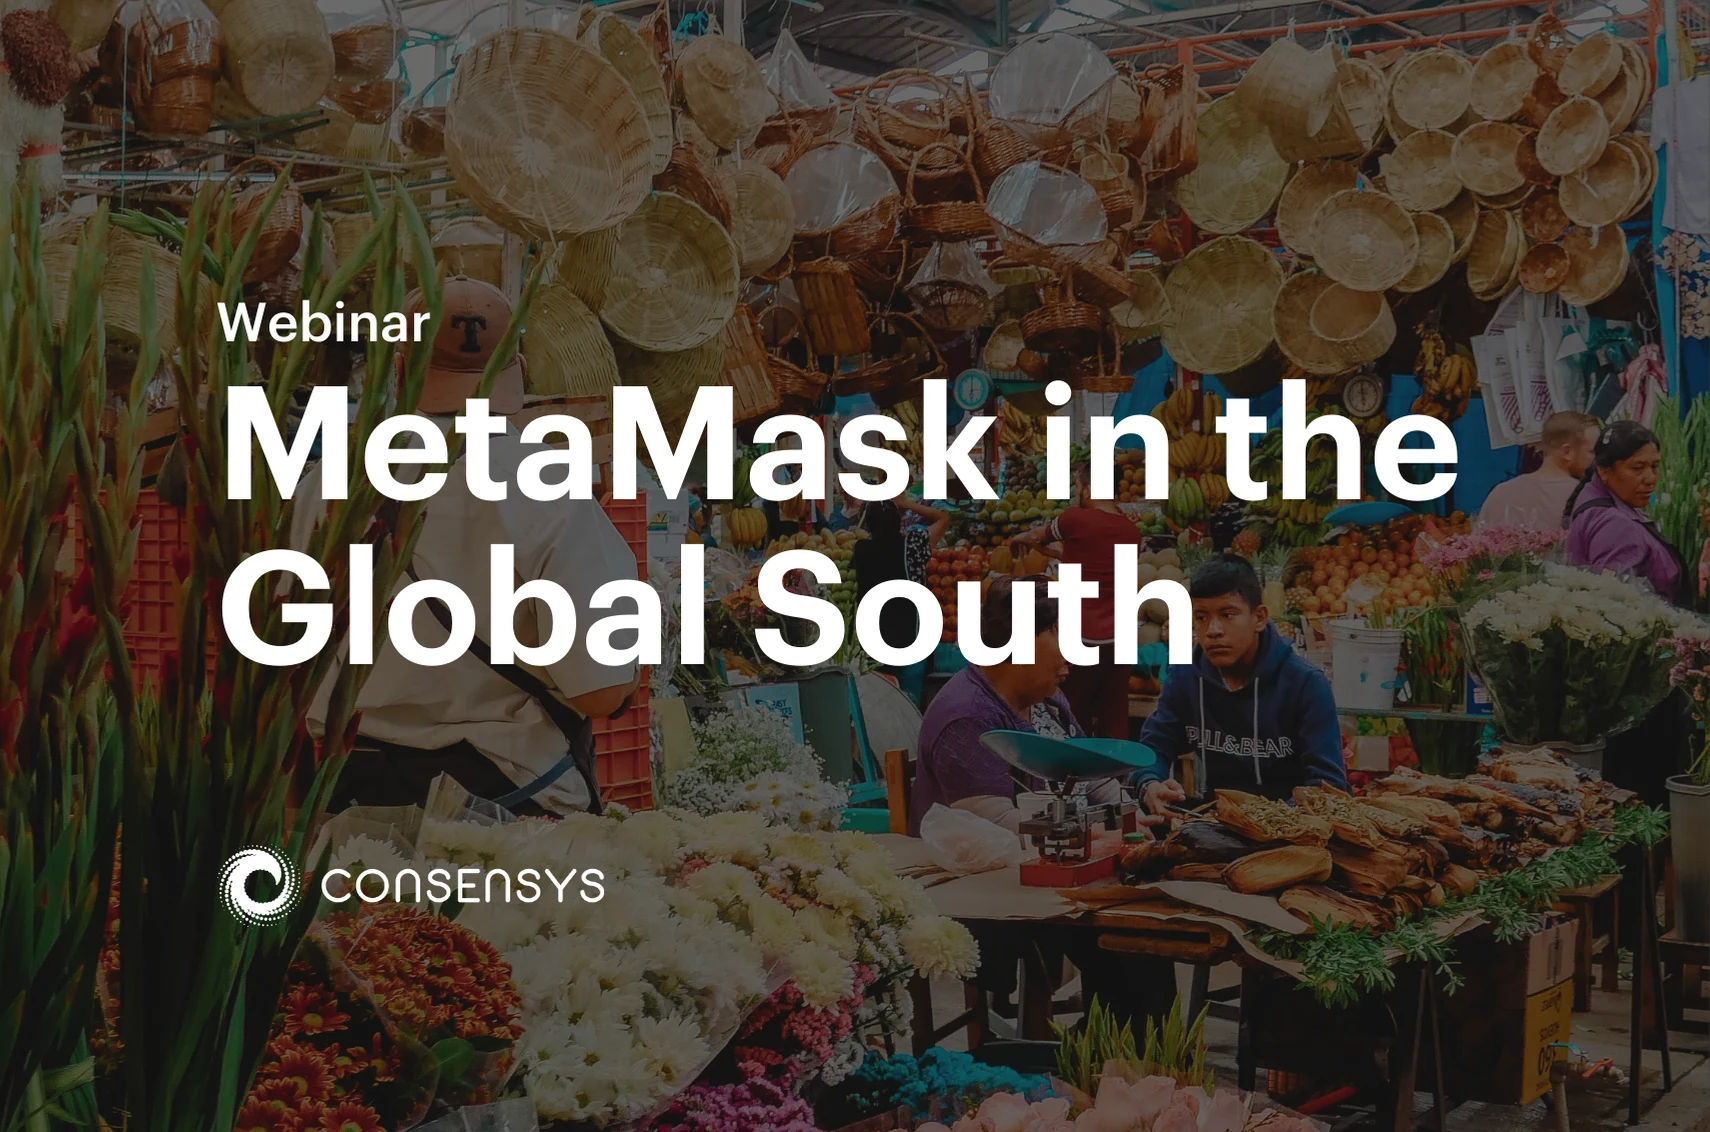 MetaMask in the Global South